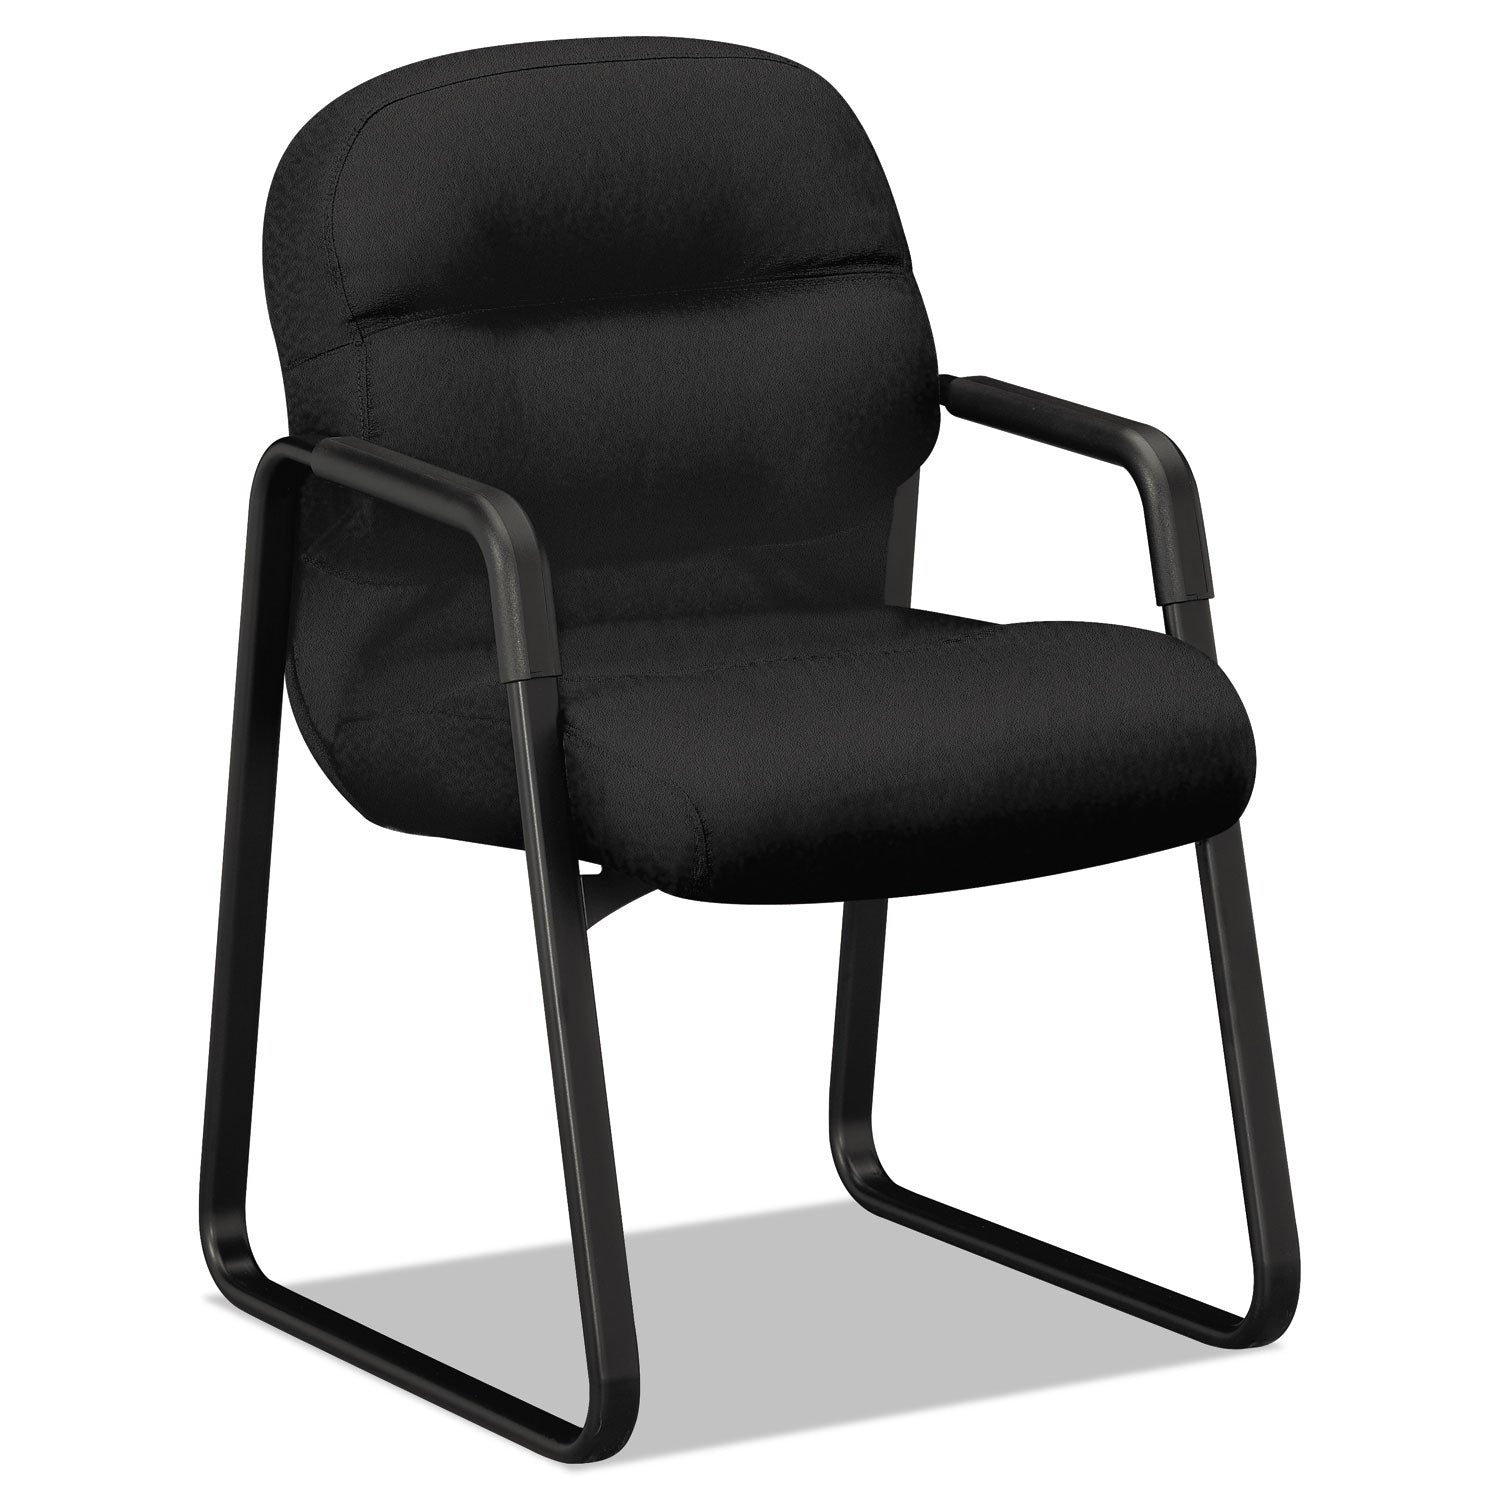 pillow-soft-2090-series-guest-arm-chair-fabric-upholstery-2325-x-28-x-36-black-seat-black-back-black-base_hon2093cu10t - 1